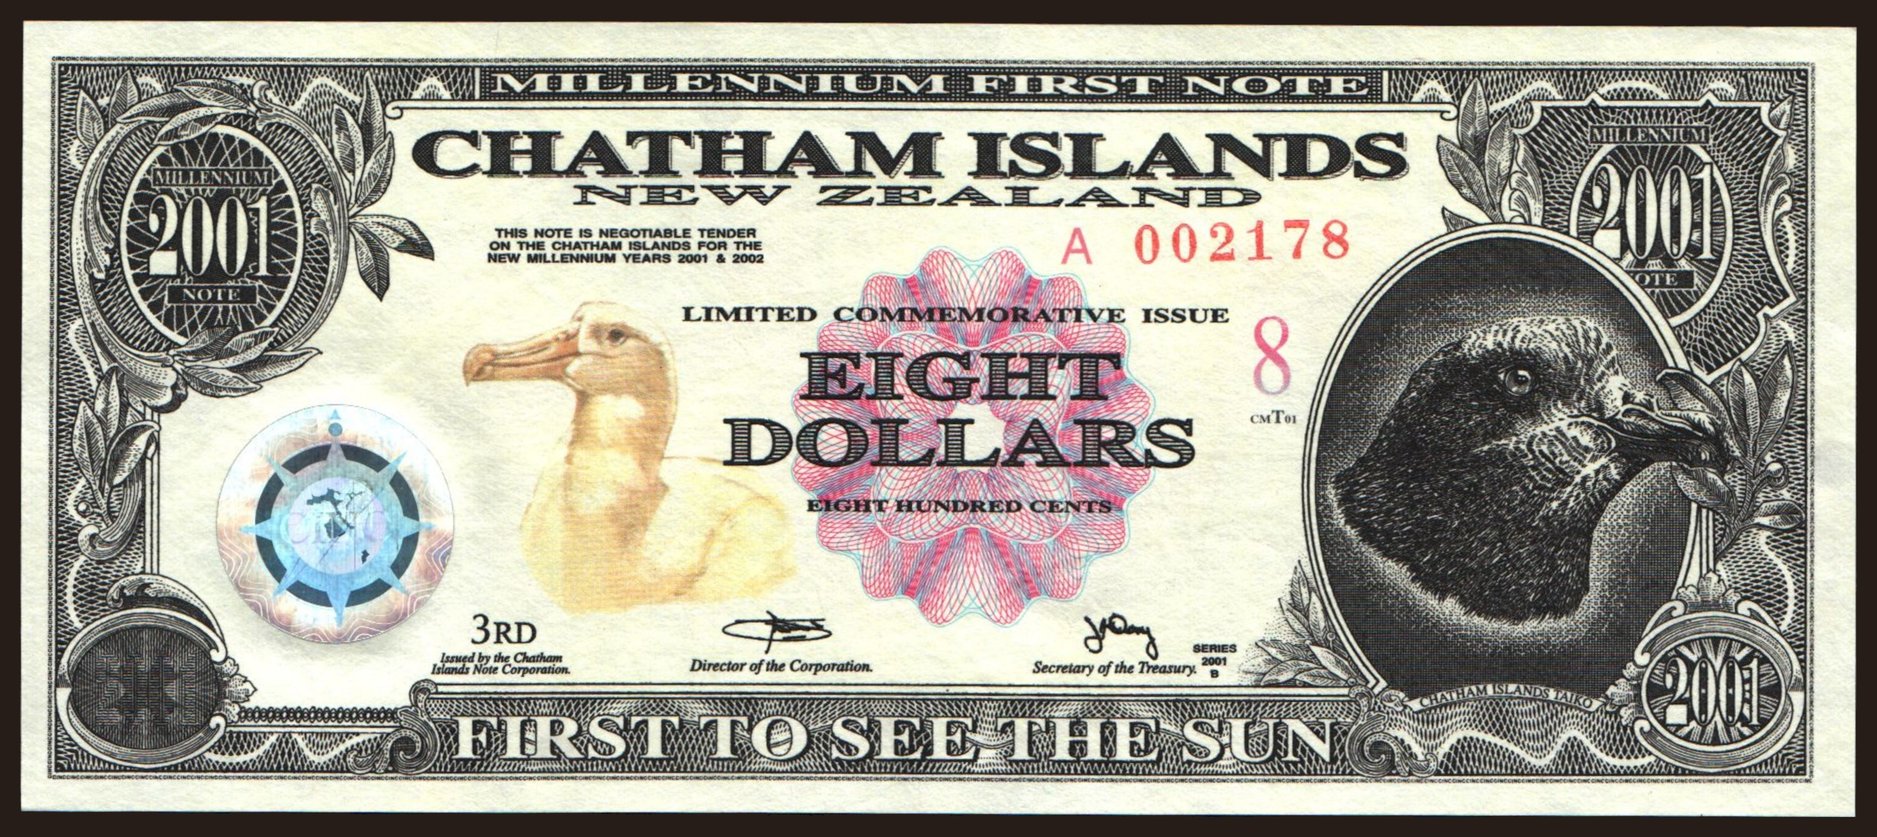 Chatham Islands, 8 dollars, 2001